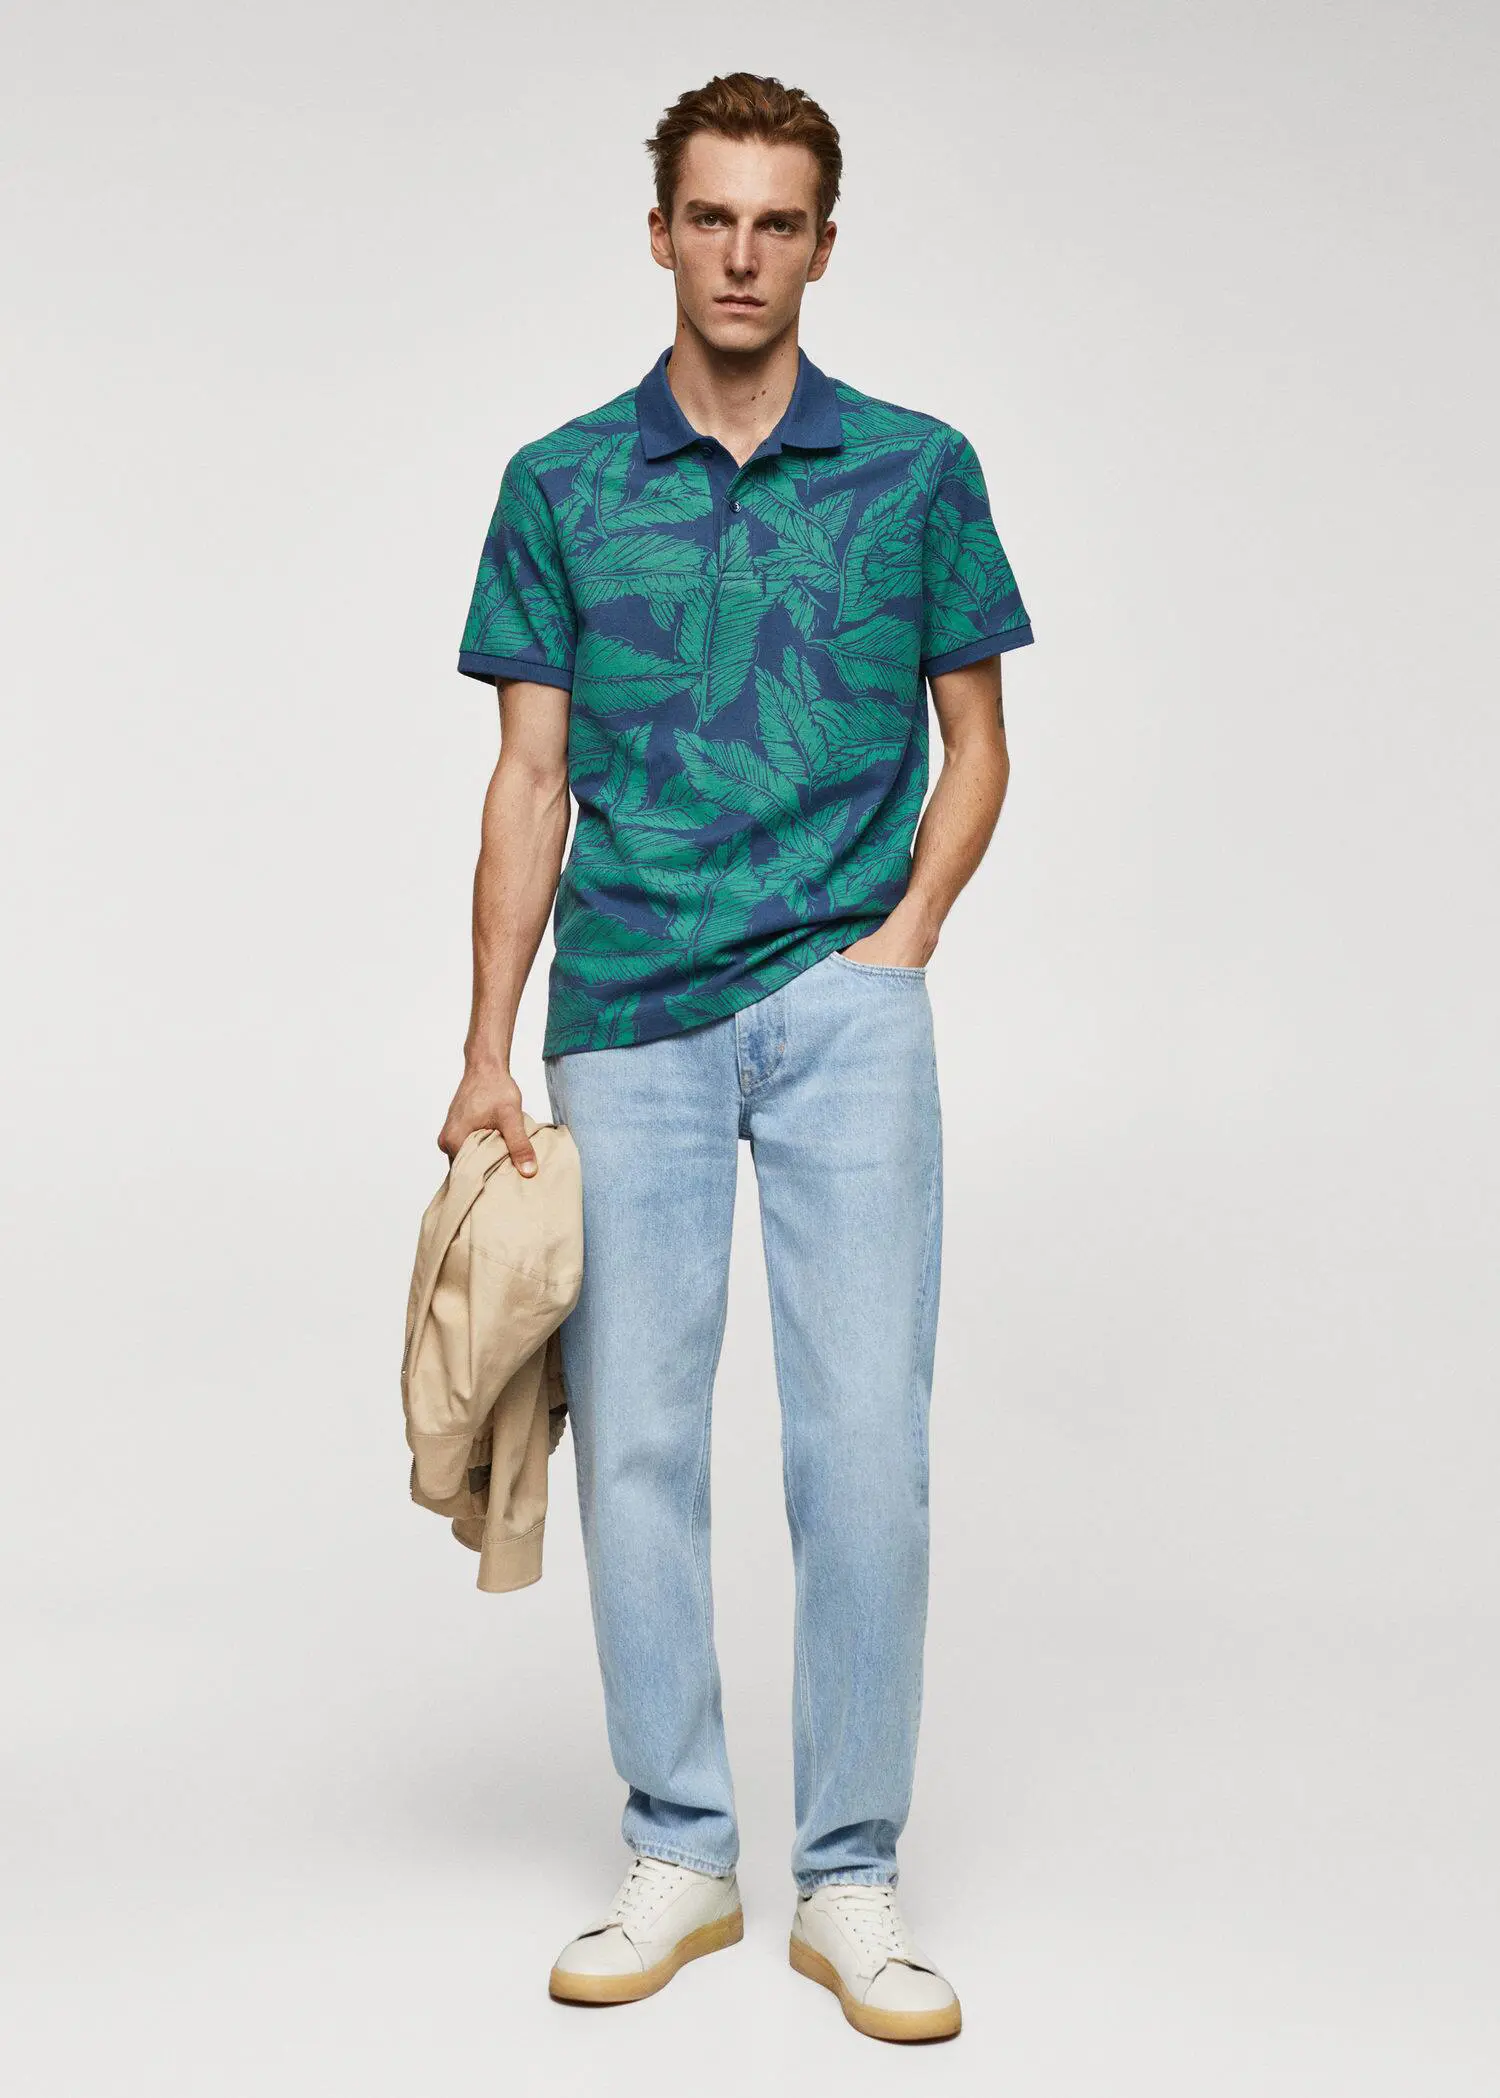 Mango Tropical print cotton polo shirt. 2